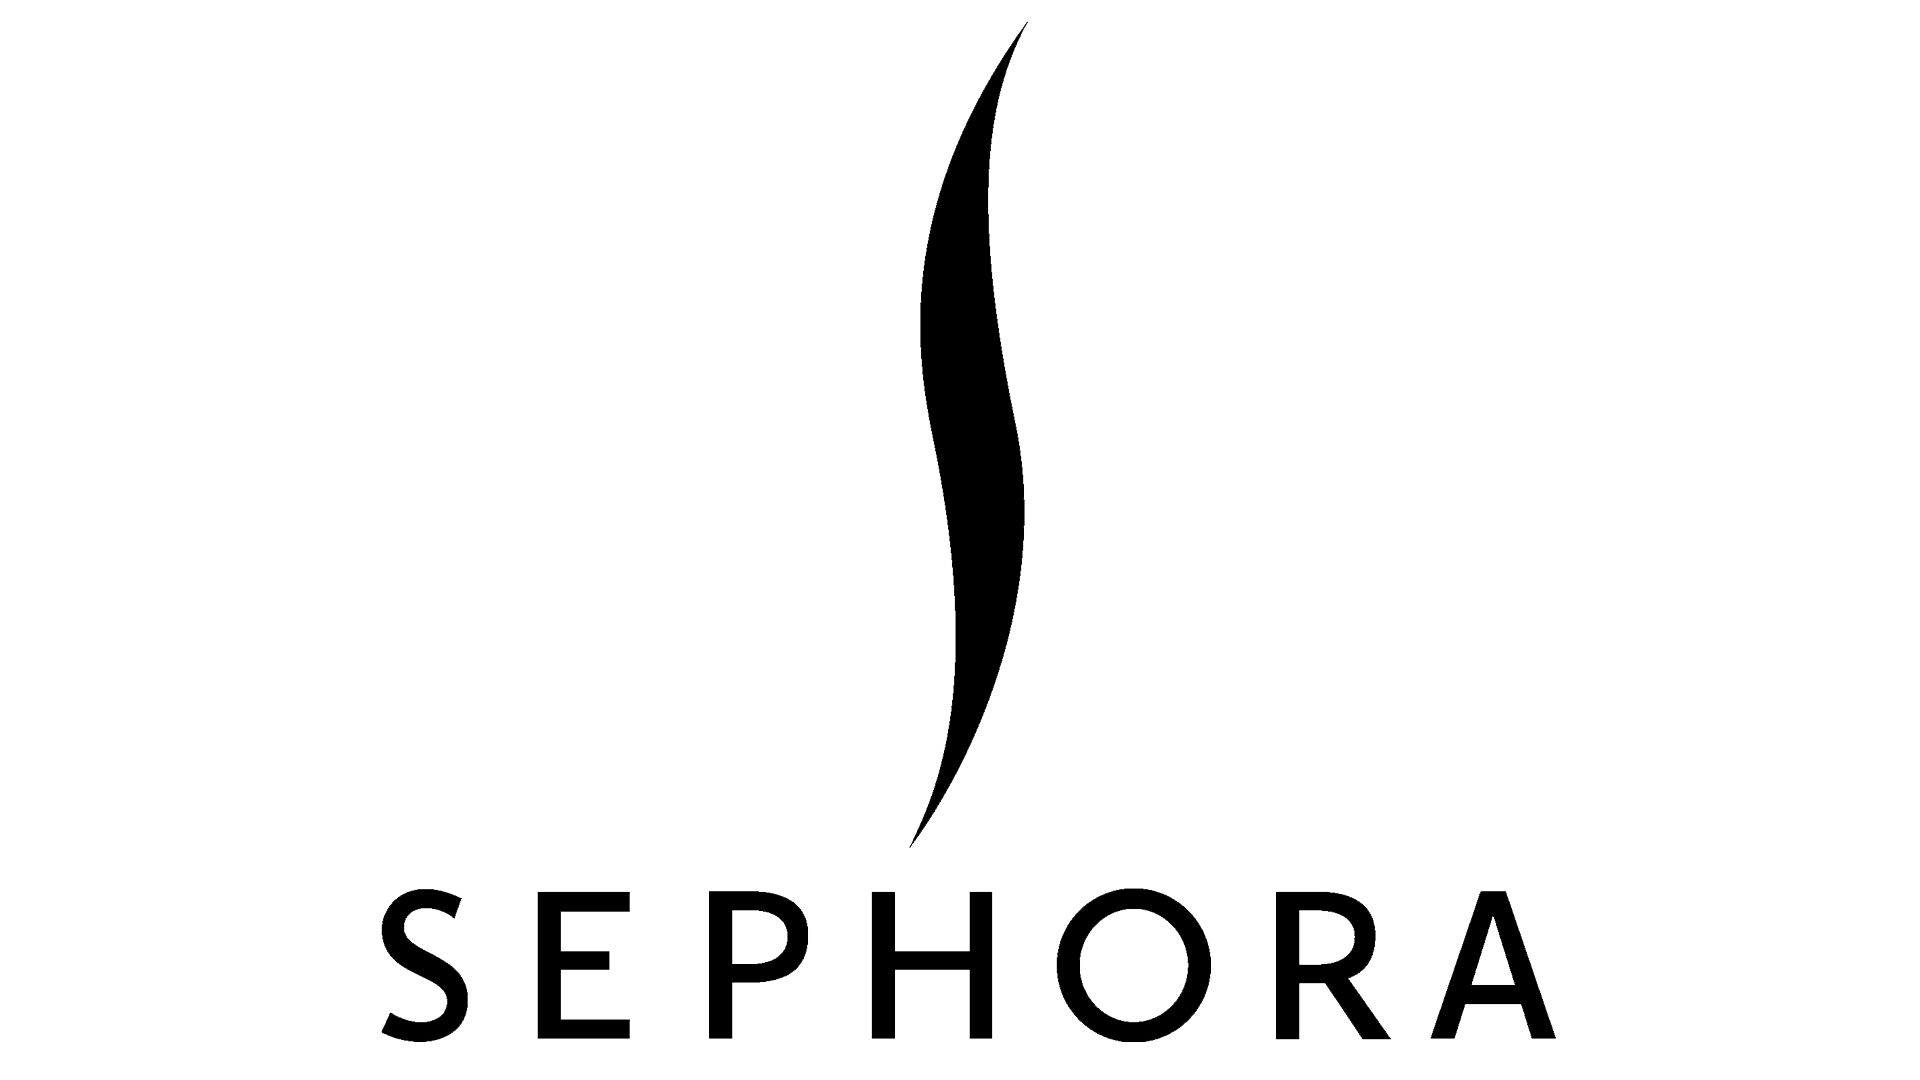 Copy of Sephora logo 1 (2).png